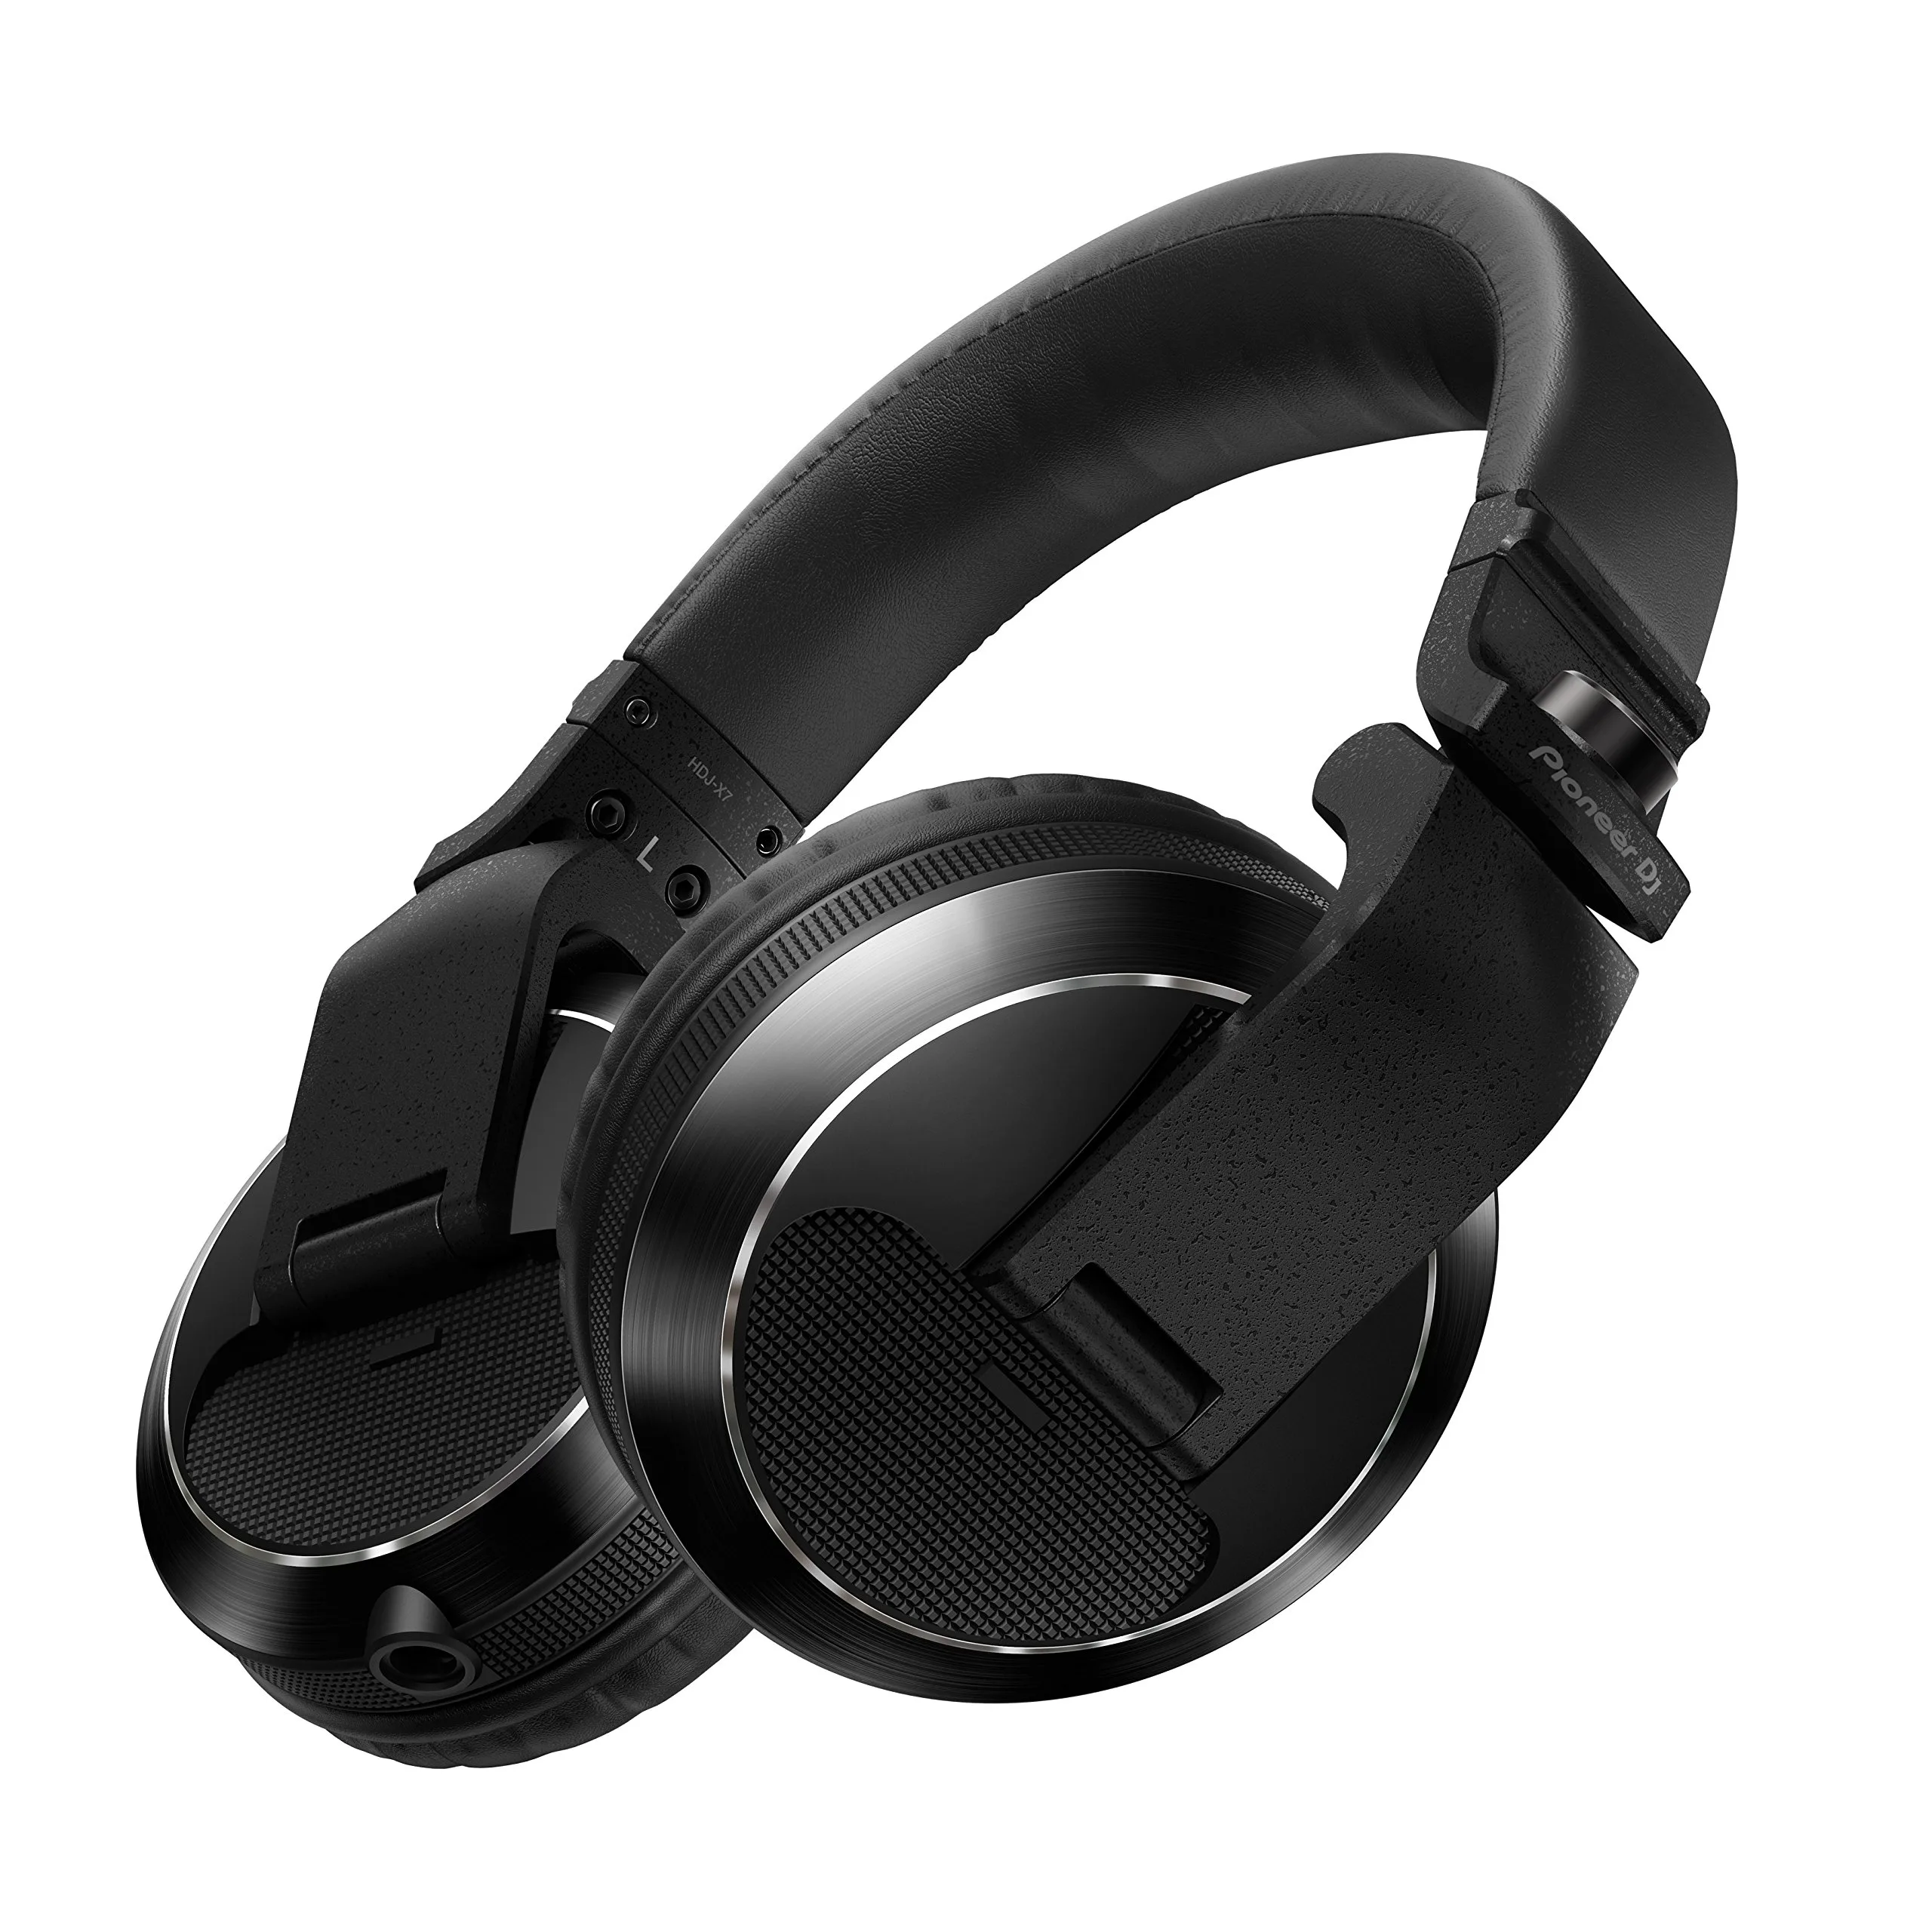 PIONEER DJ HDJ-X7 Professional Over-Ear DJ Headphones (Black)